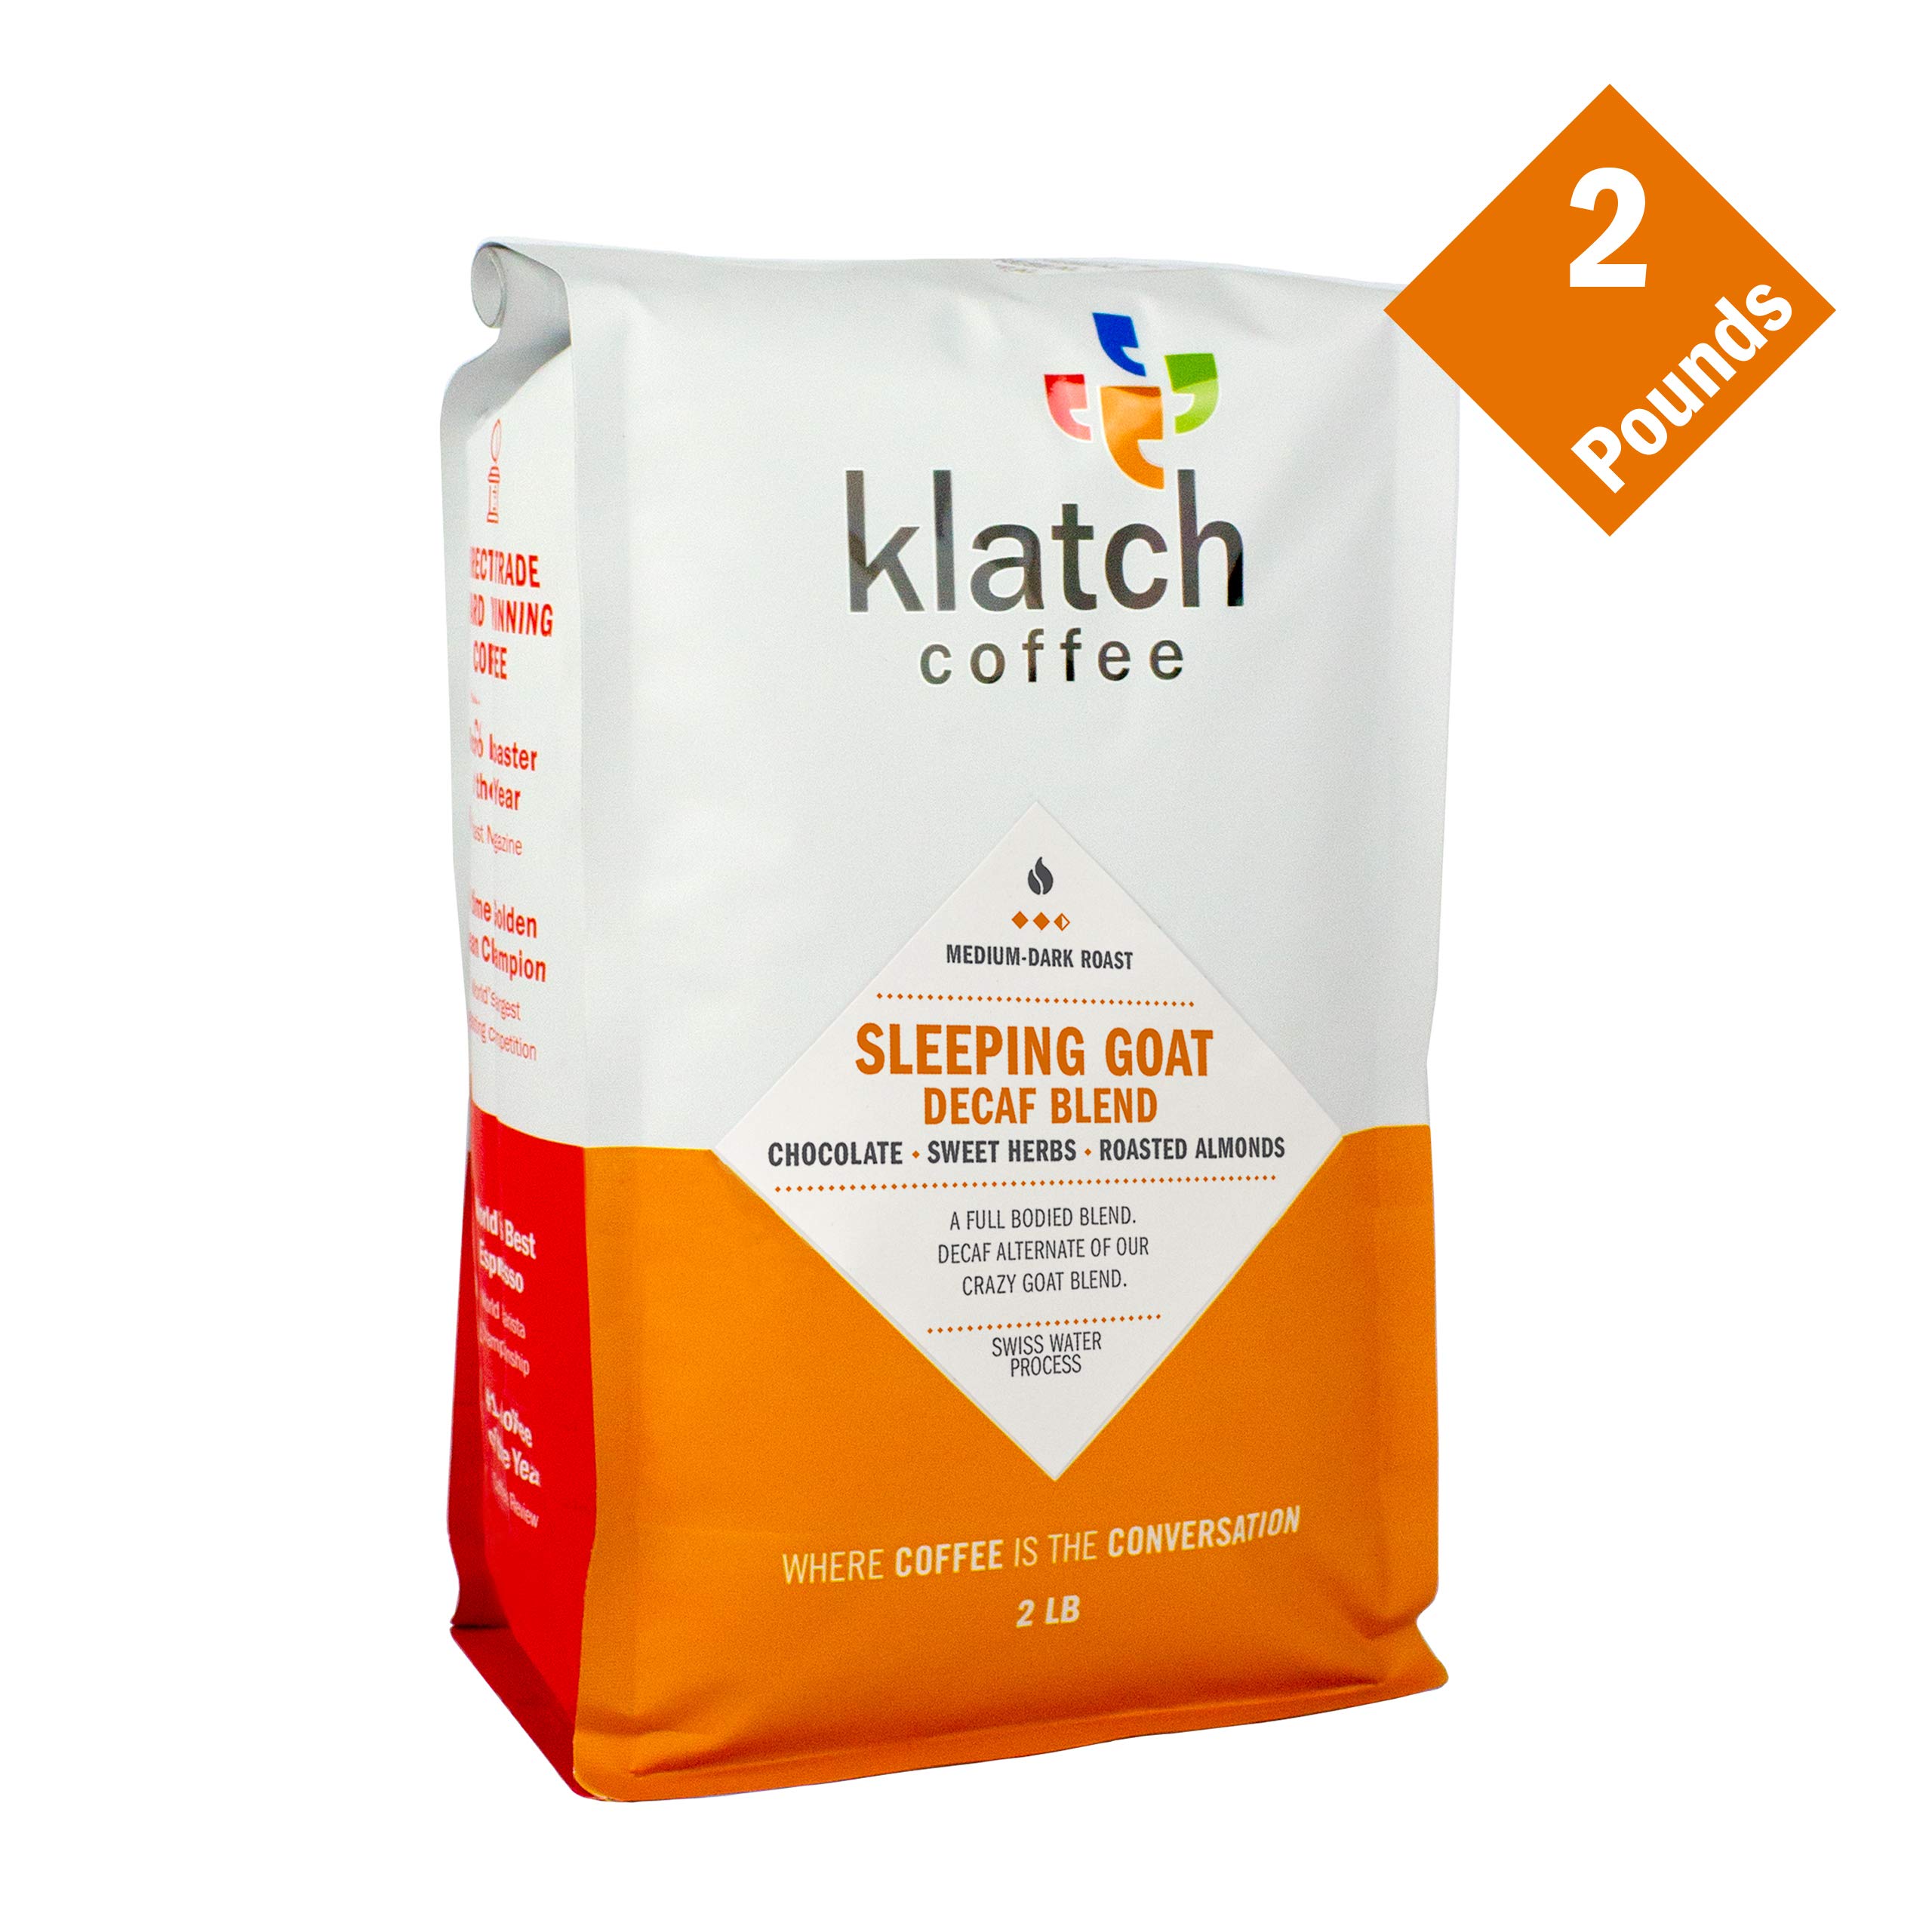 Klatch Coffee Sleeping Goat Decaf Blend Medium-Dark Roast, 2 Pounds, Whole Bean